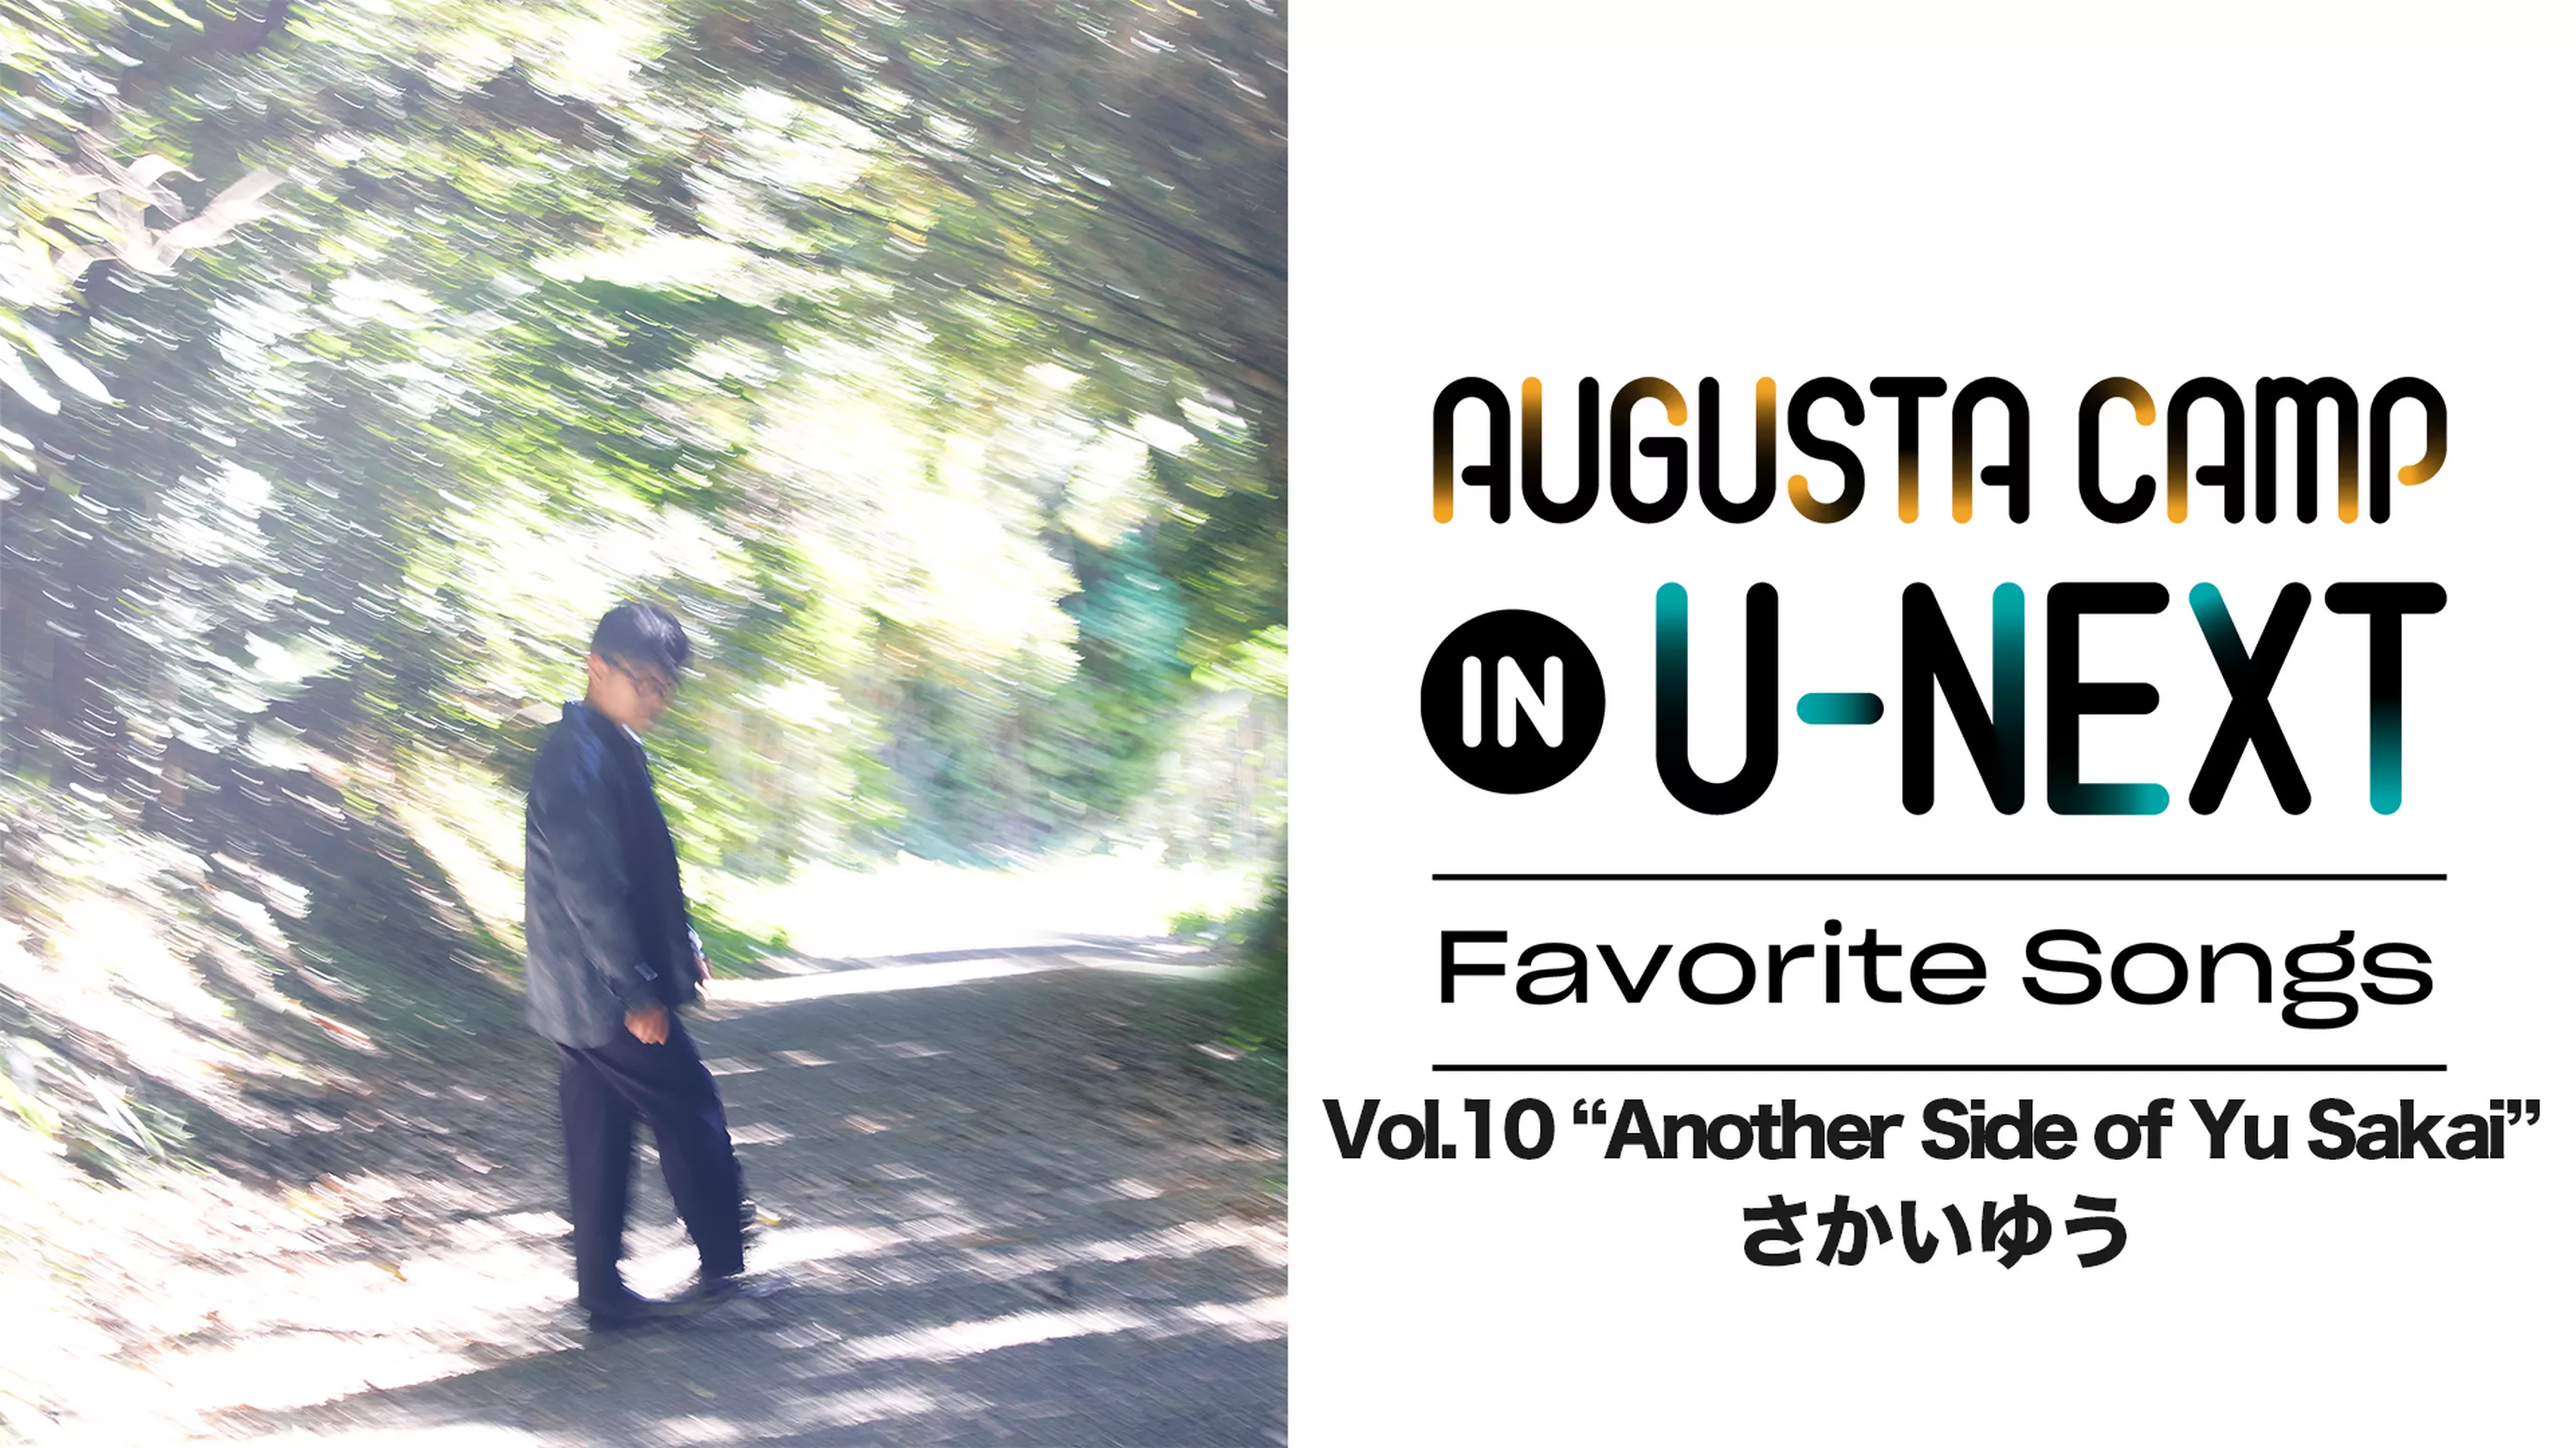 「Augusta Camp in U-NEXT ～Favorite Songs～」Vol.10 “Another Side of Yu Sakai”